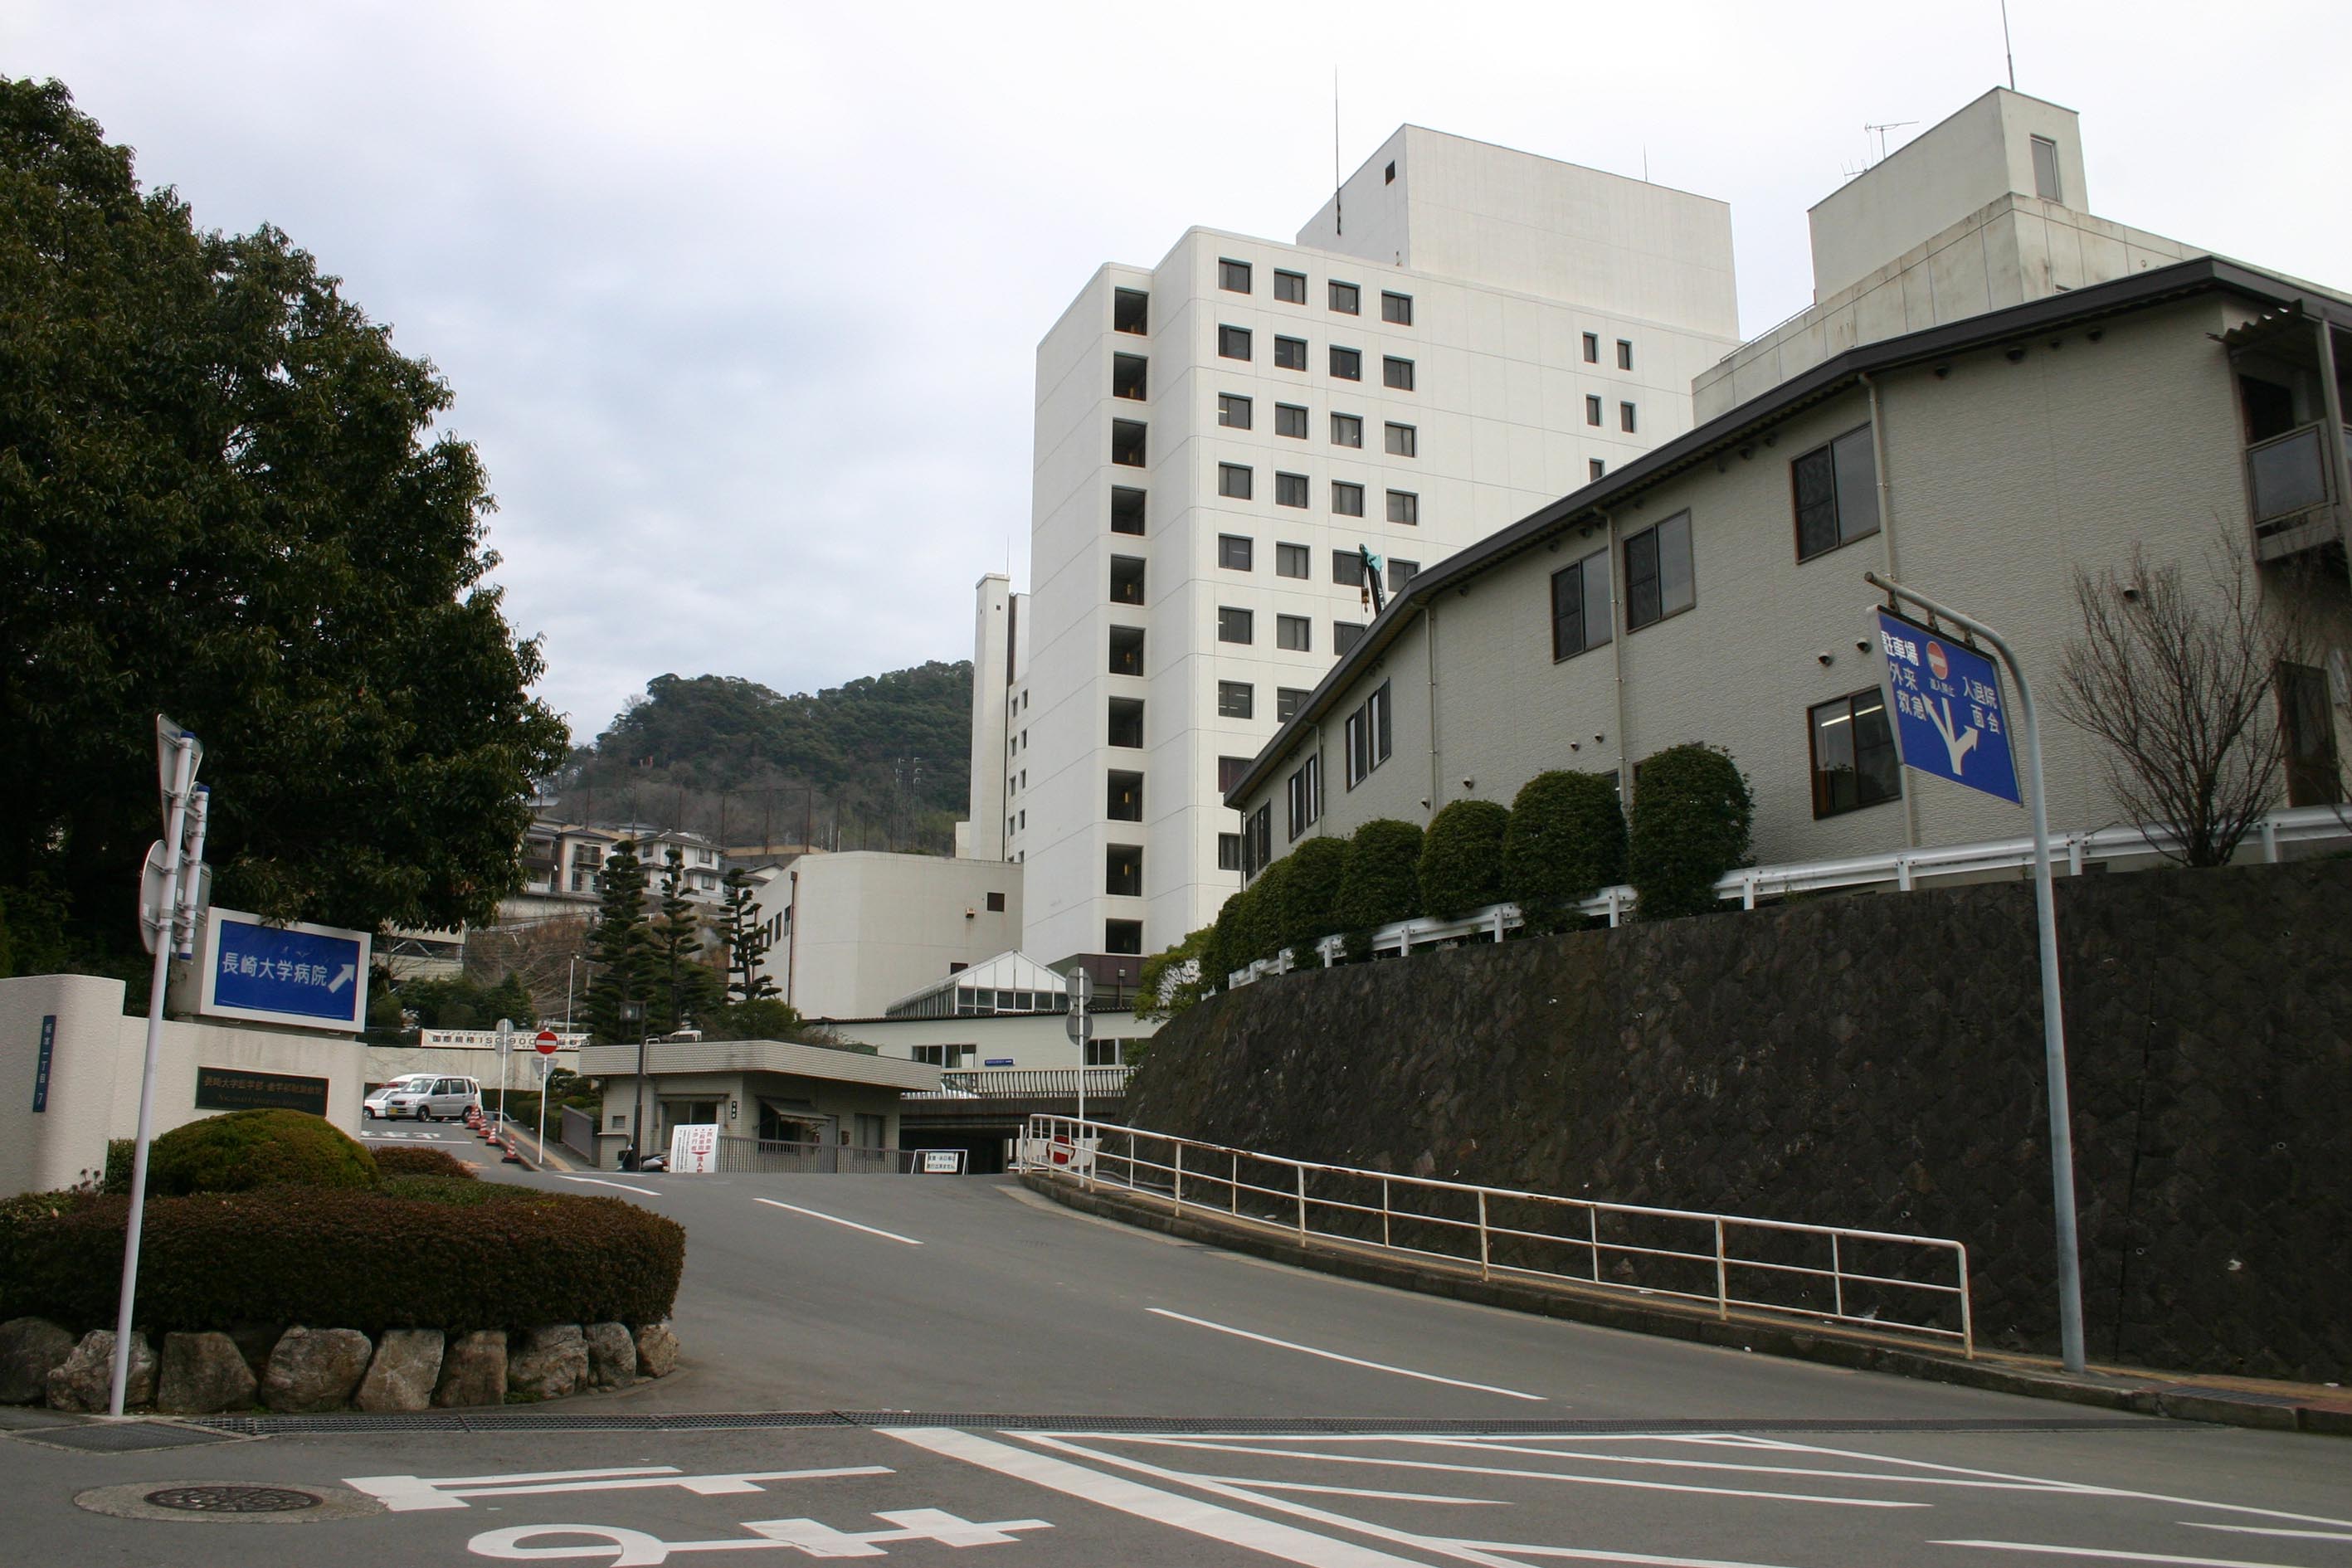 Hospital. 385m to Nagasaki University Hospital (Hospital)